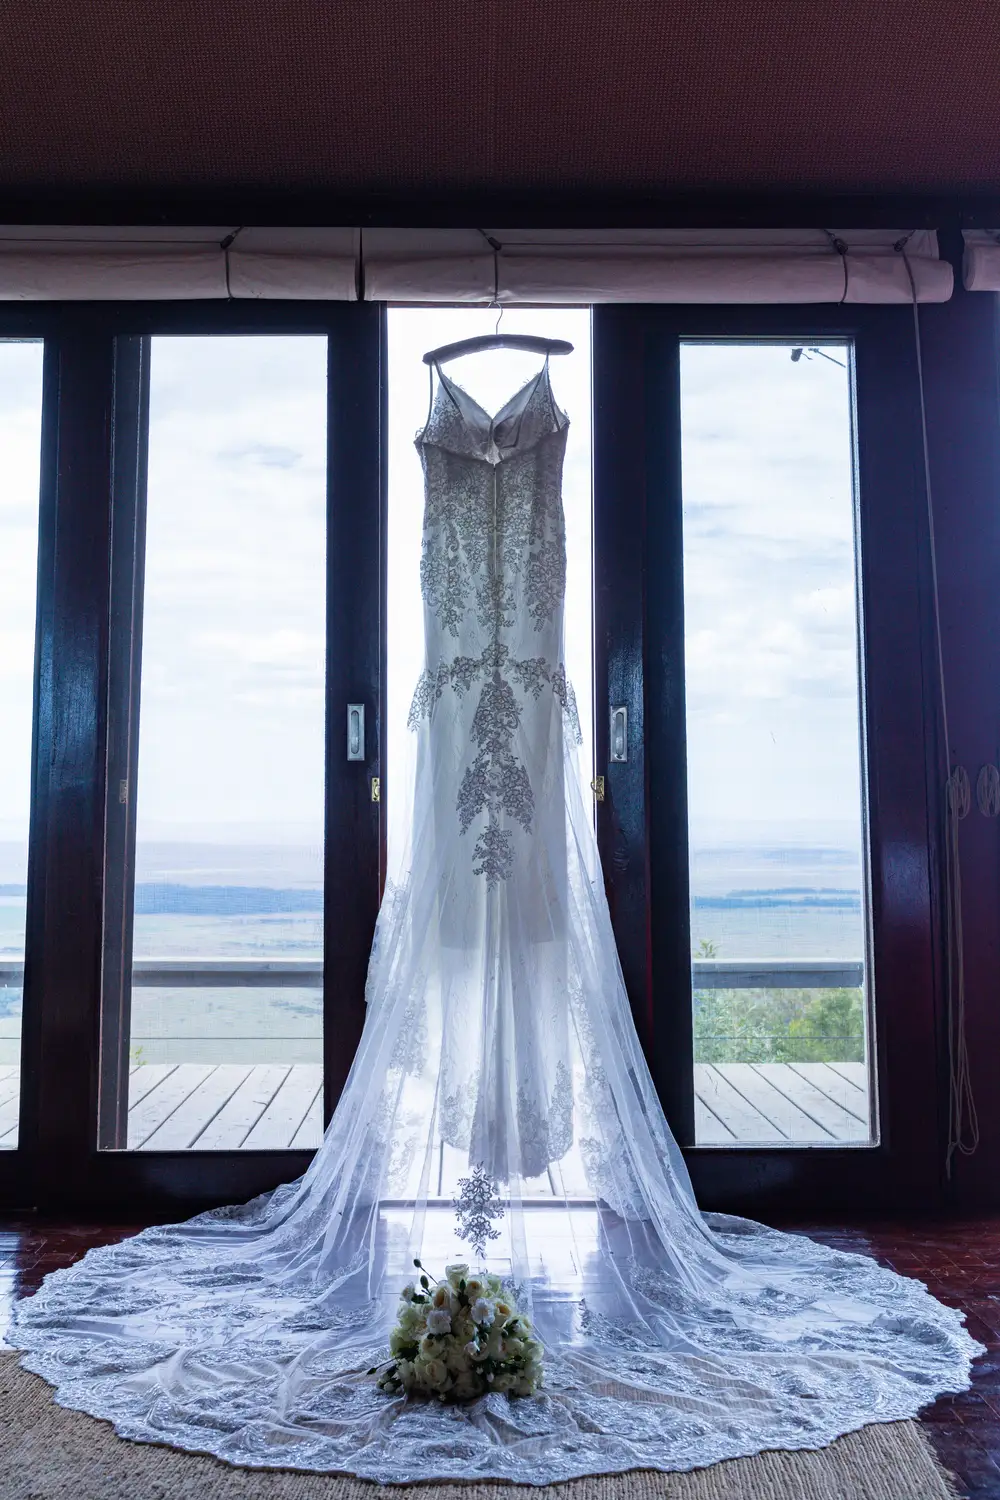 Elegant long white dress hung in a room